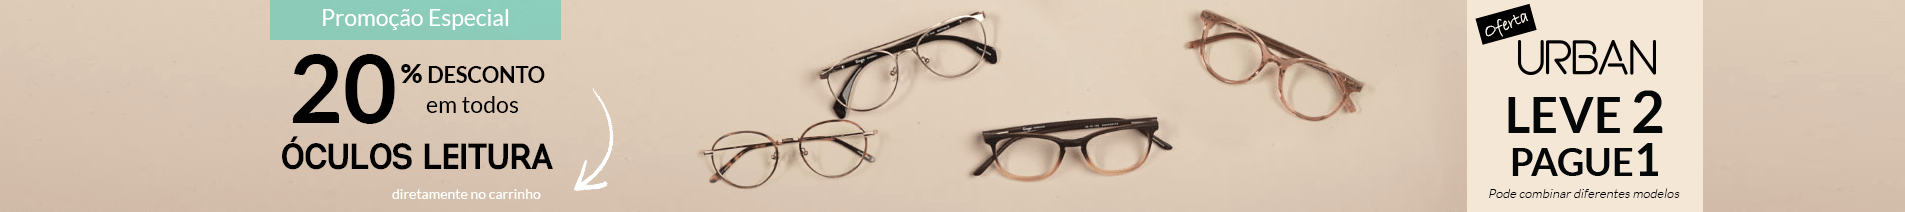 Óculos Online em Lentes de Contacto 365